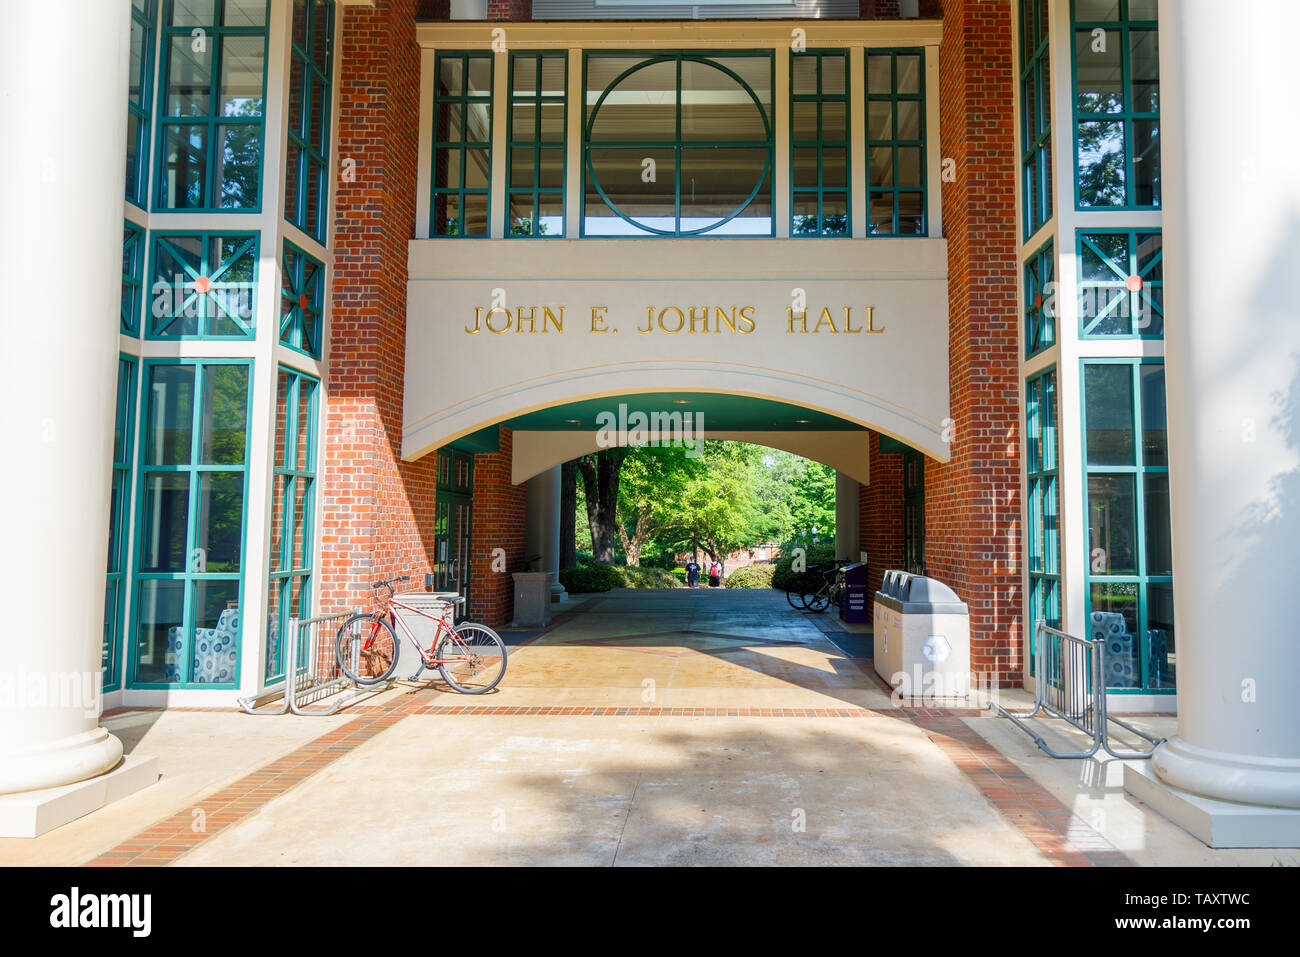 GREENVILLE, SC, USA - Mai 2: Johns Halle an der Furman University am 2. Mai 2019 in Greenville, South Carolina. Stockfoto